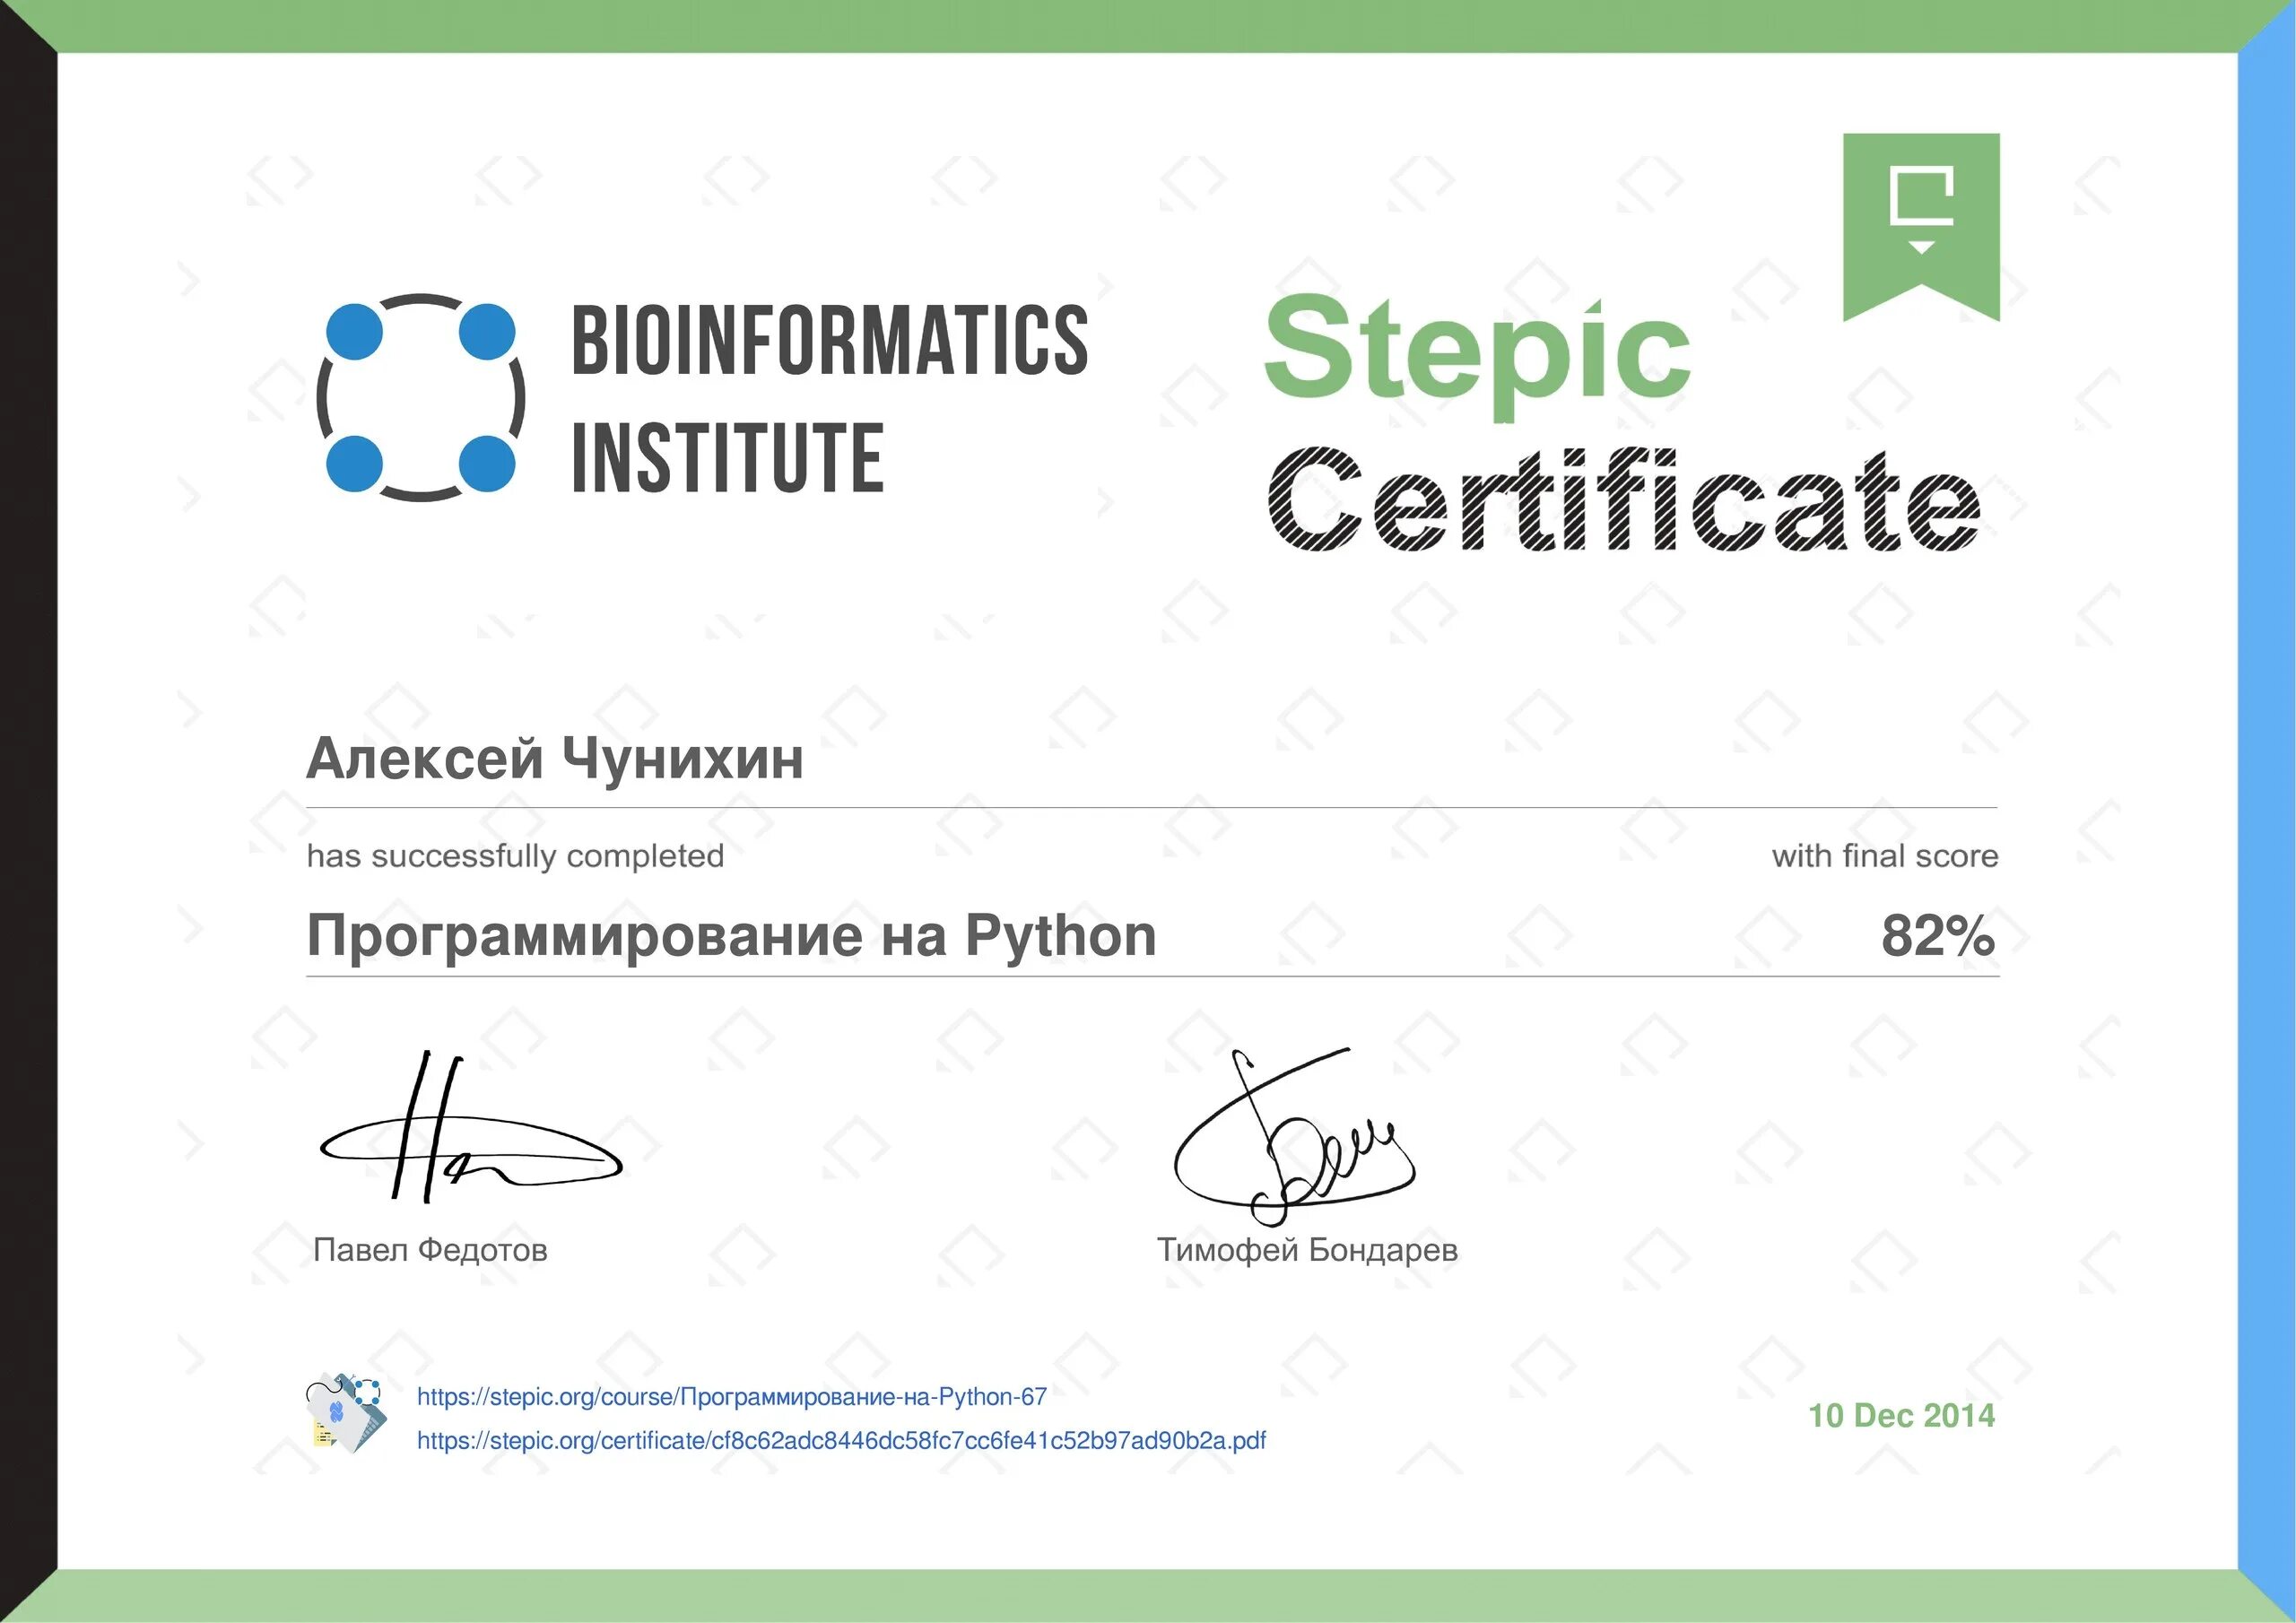 Python certificate. Сертификат Степик питон. Сертификат stepik поколение Python. Сертификат институт биоинформатики. Сертификат прохождения курса программиста на питоне.